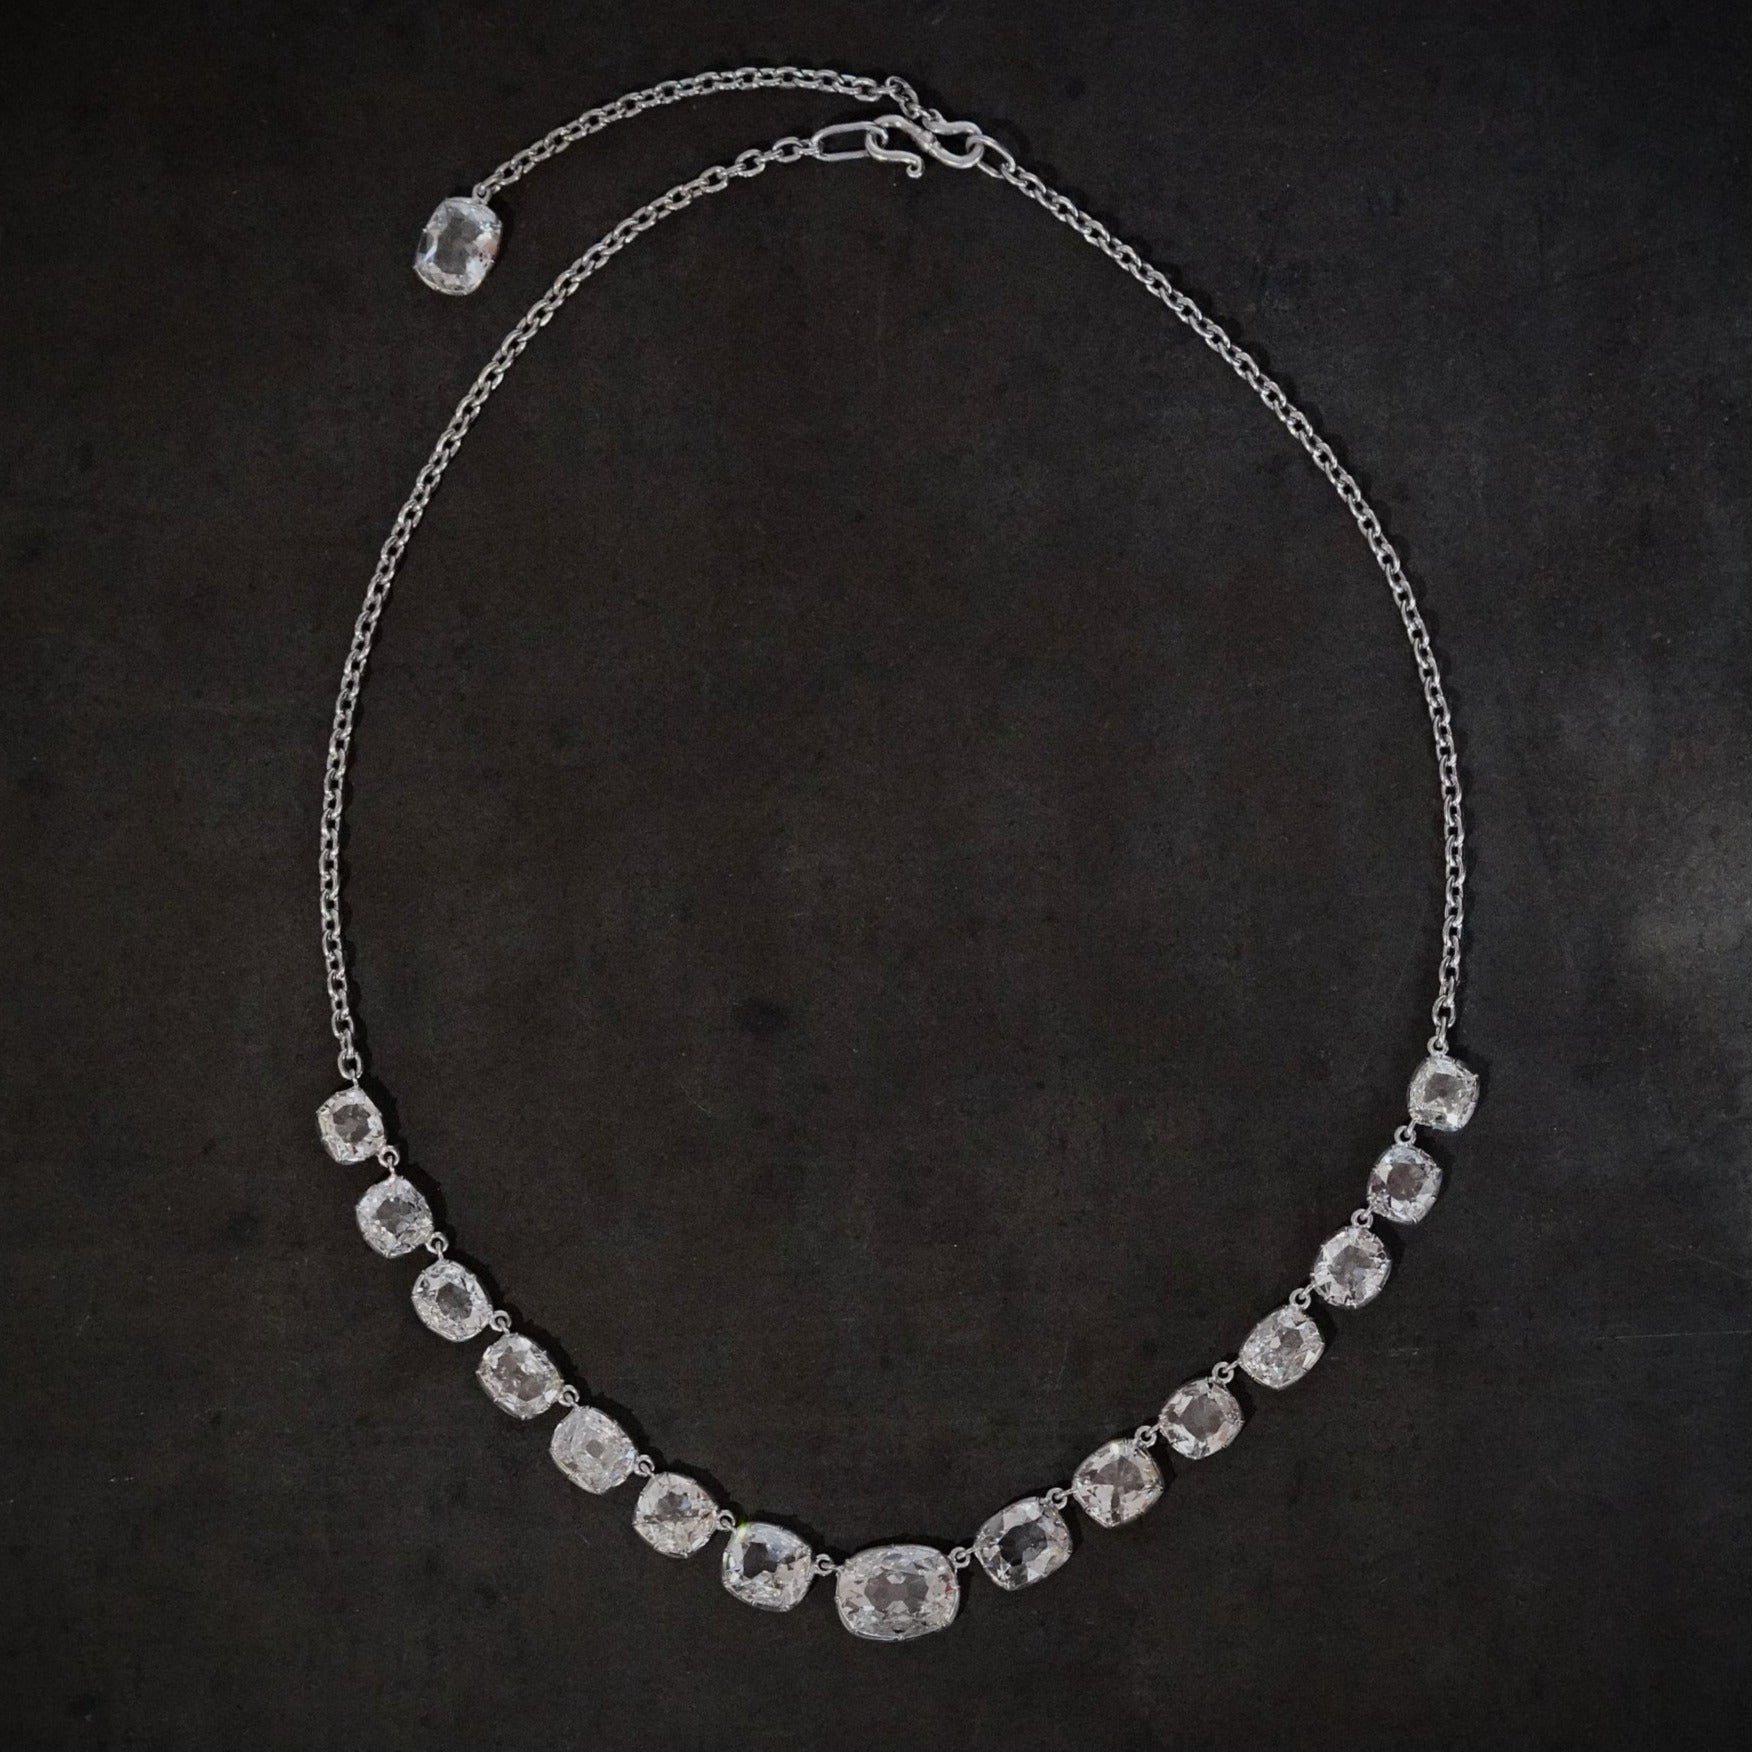 18.72-Carat Cushion-Cut Diamond Necklace